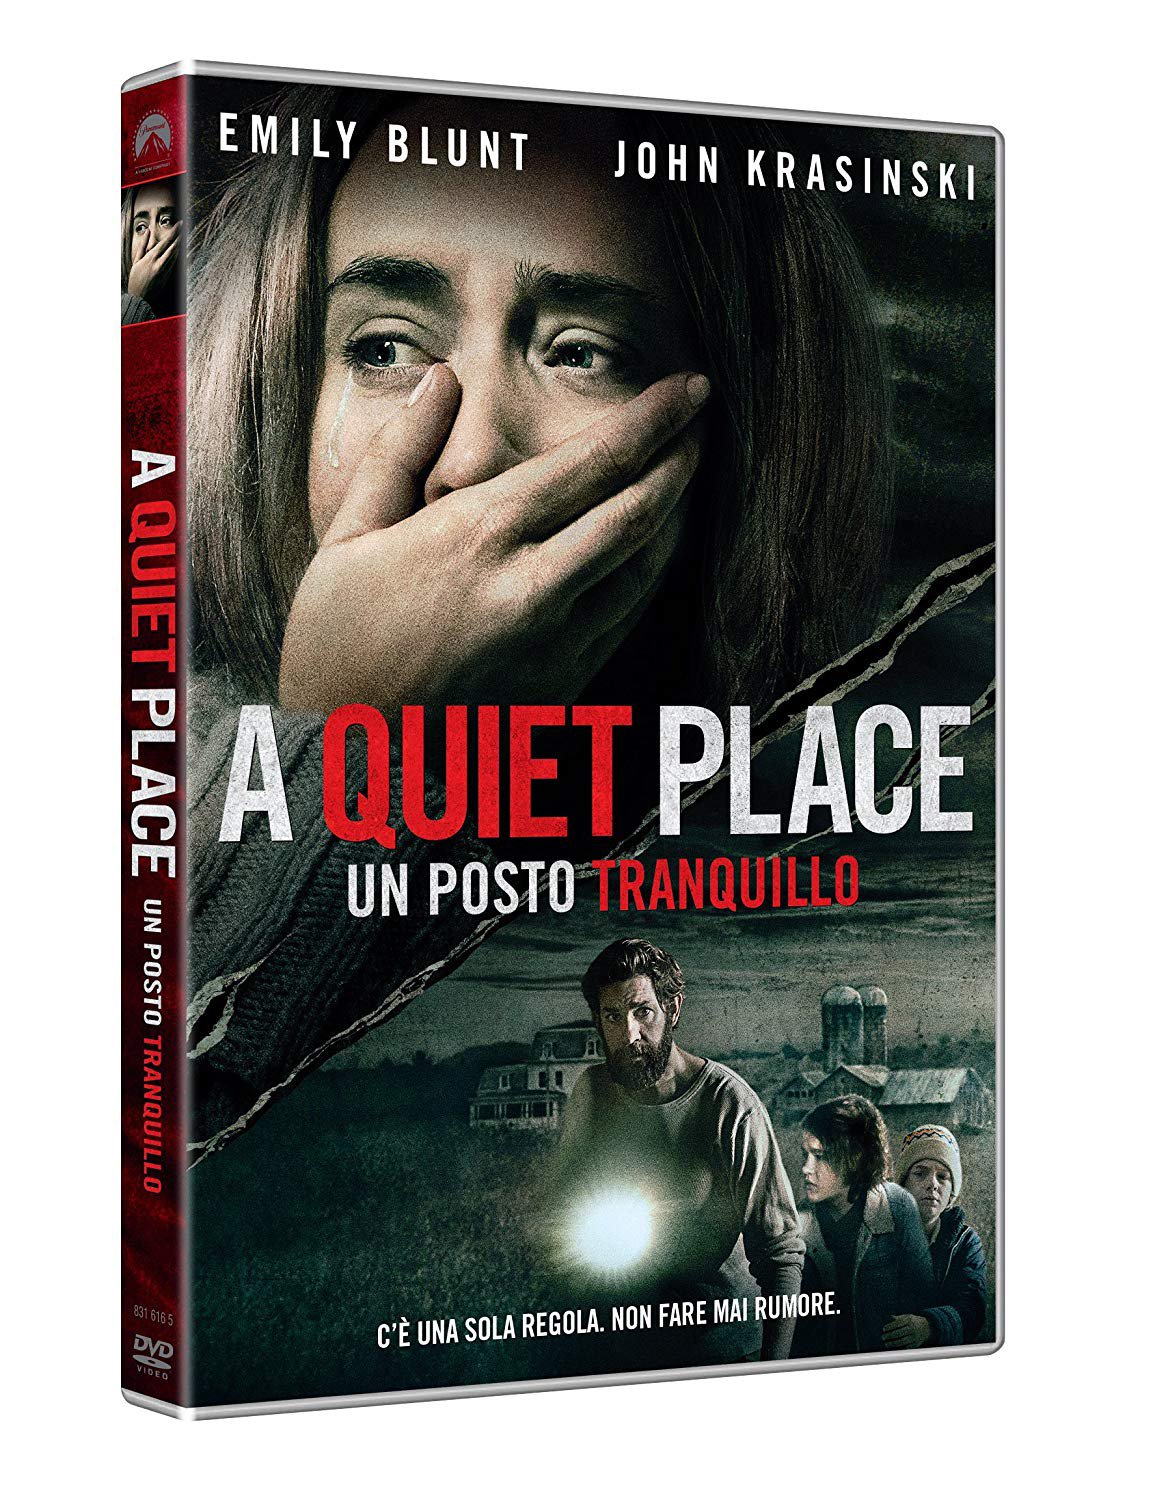 A quiet place versione DVD 